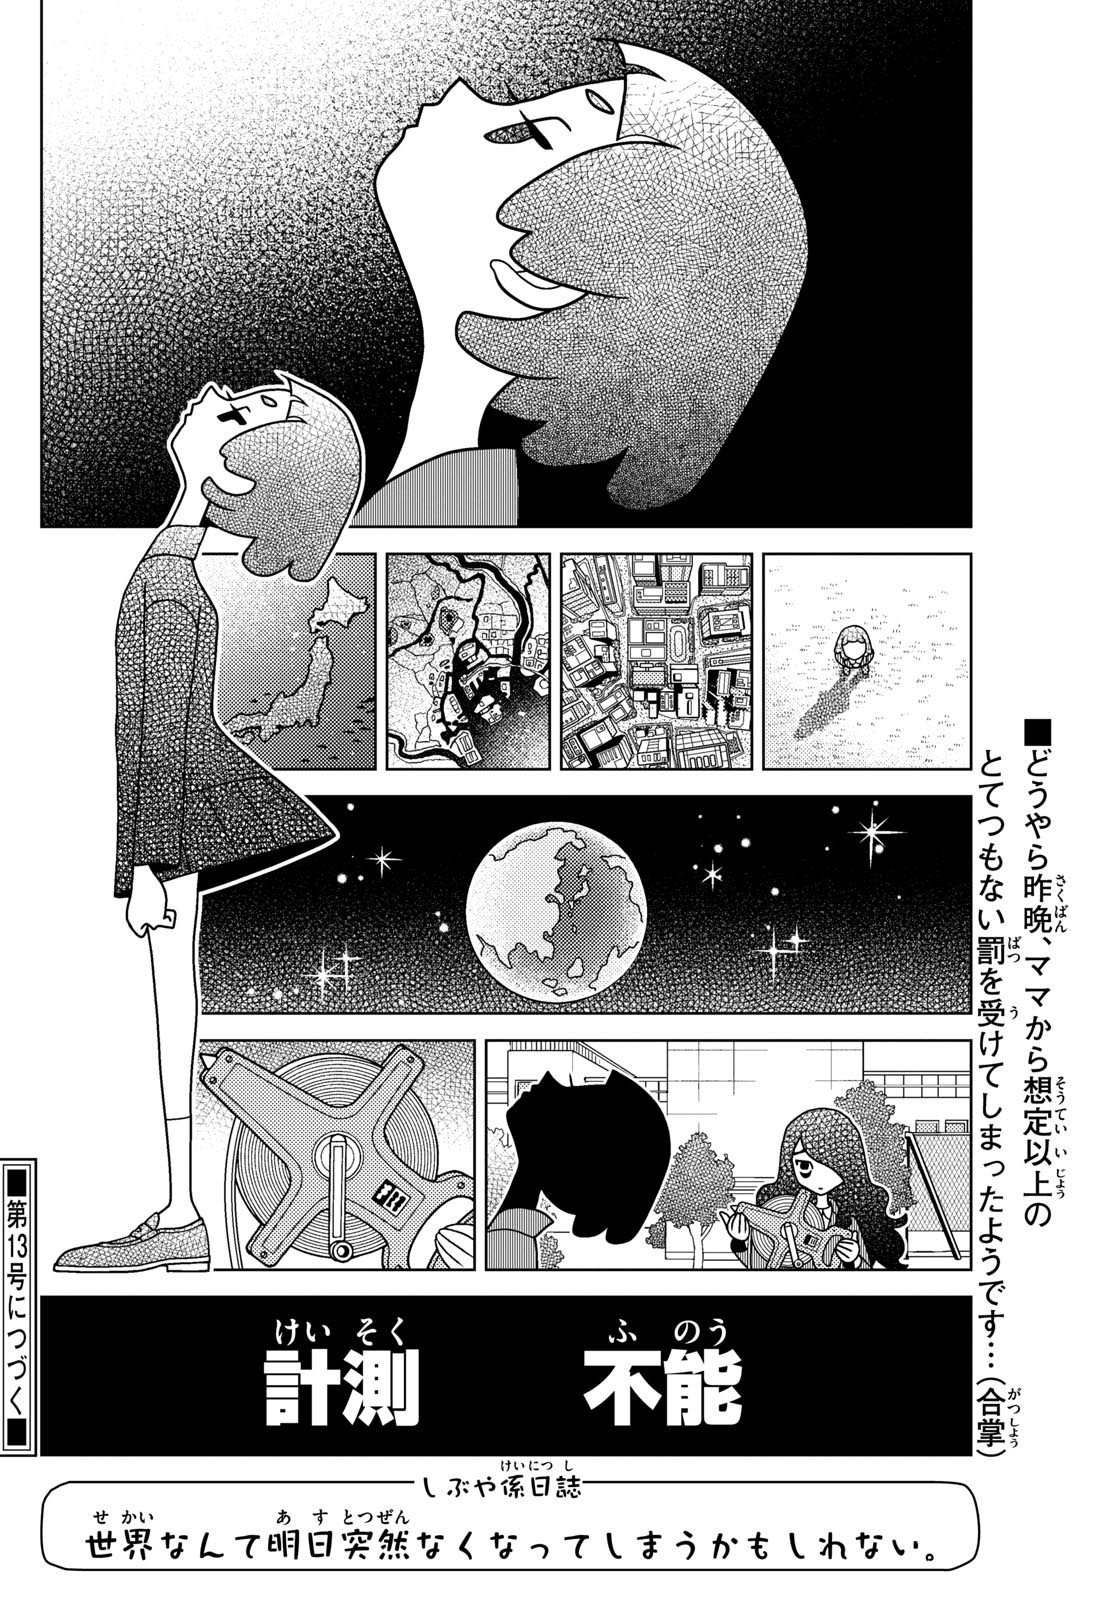 Shibuya Near Family - Chapter 086 - Page 8